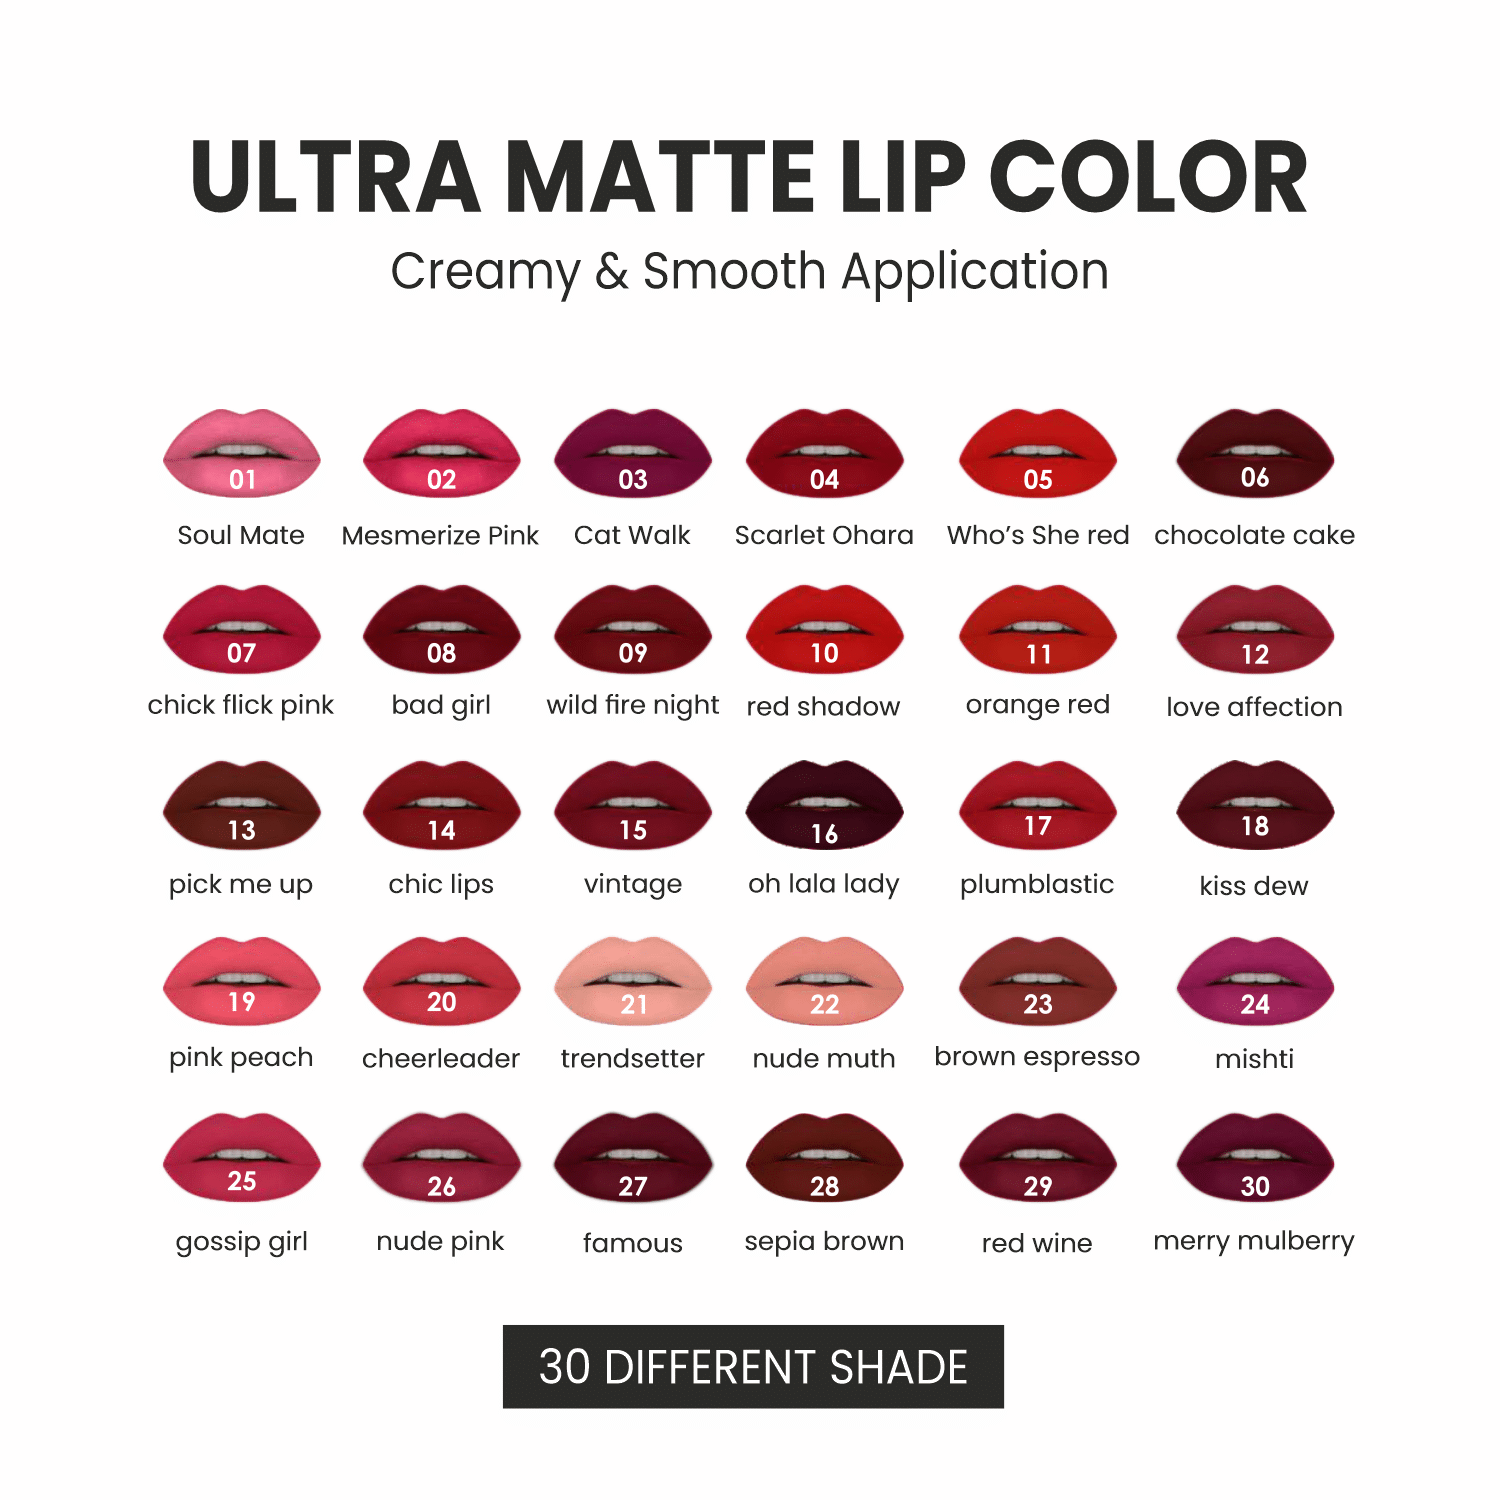 Ultra Matte Lip Color - 16 Oh Lala Lady